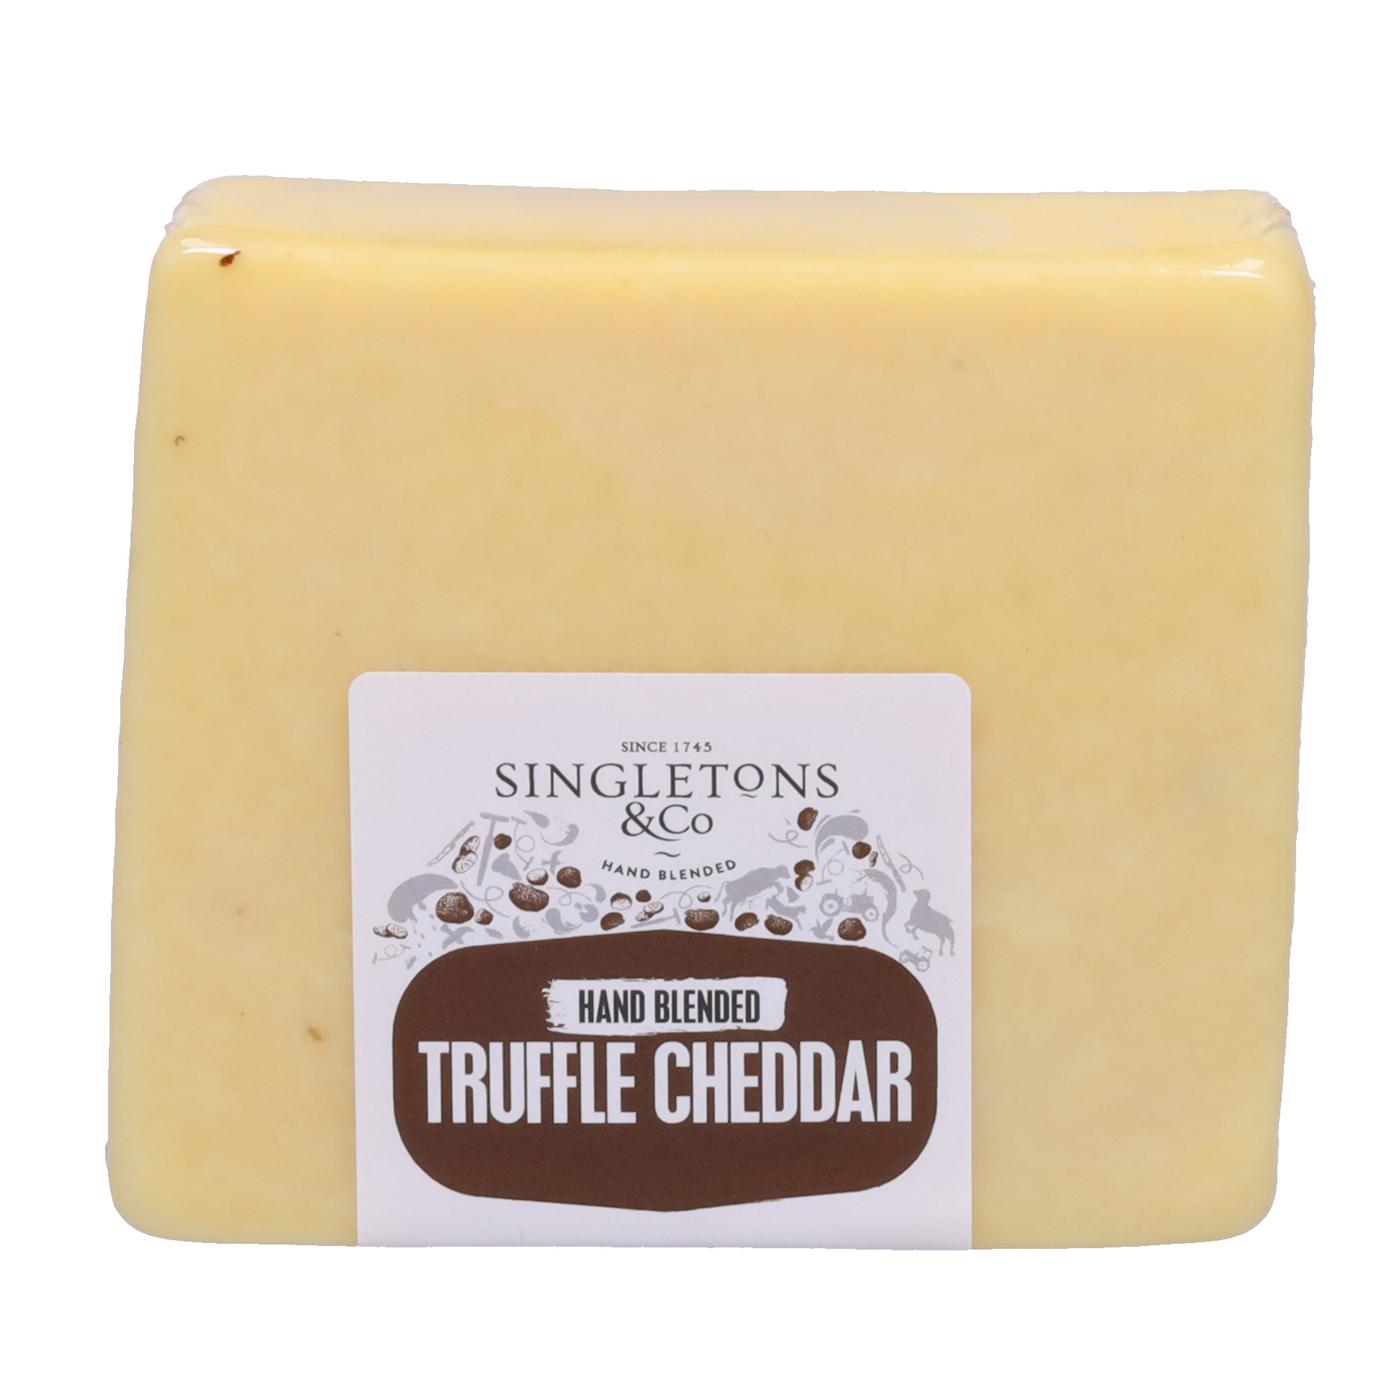 Singleton's English Truffle Cheddar Cheese; image 1 of 2